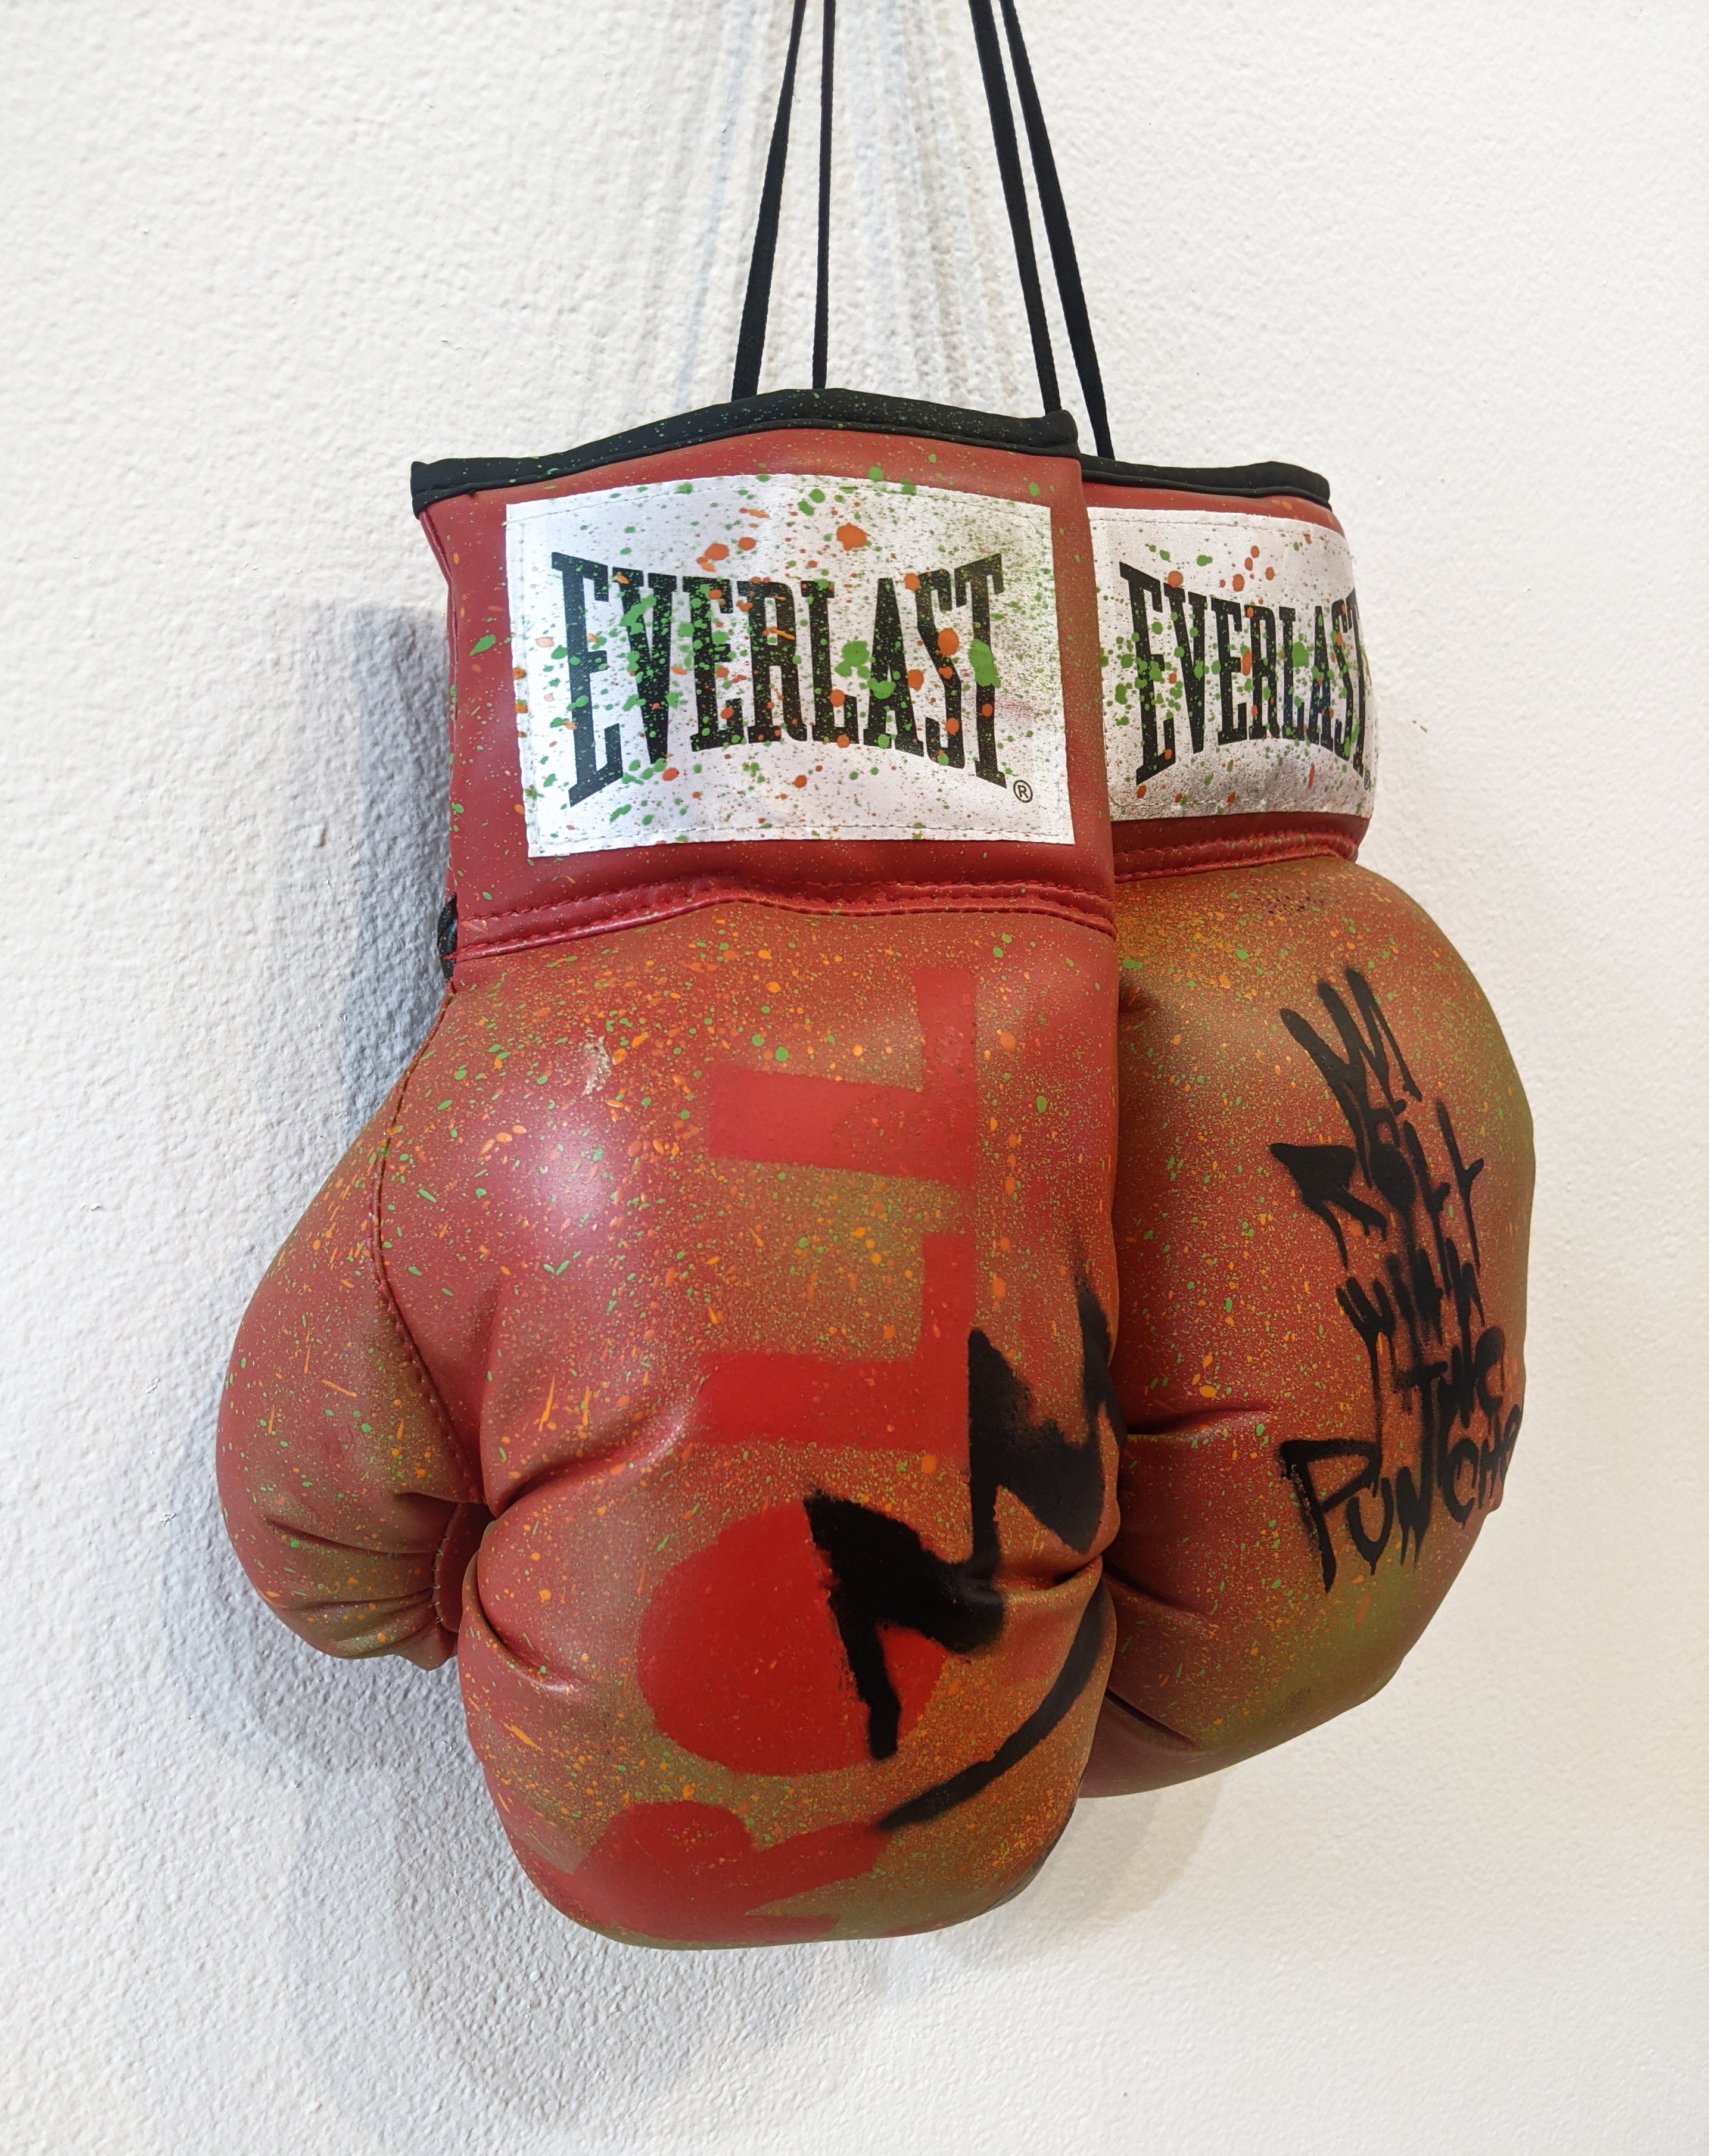 "Vintage Boxing Gloves 2" by JC Rivera